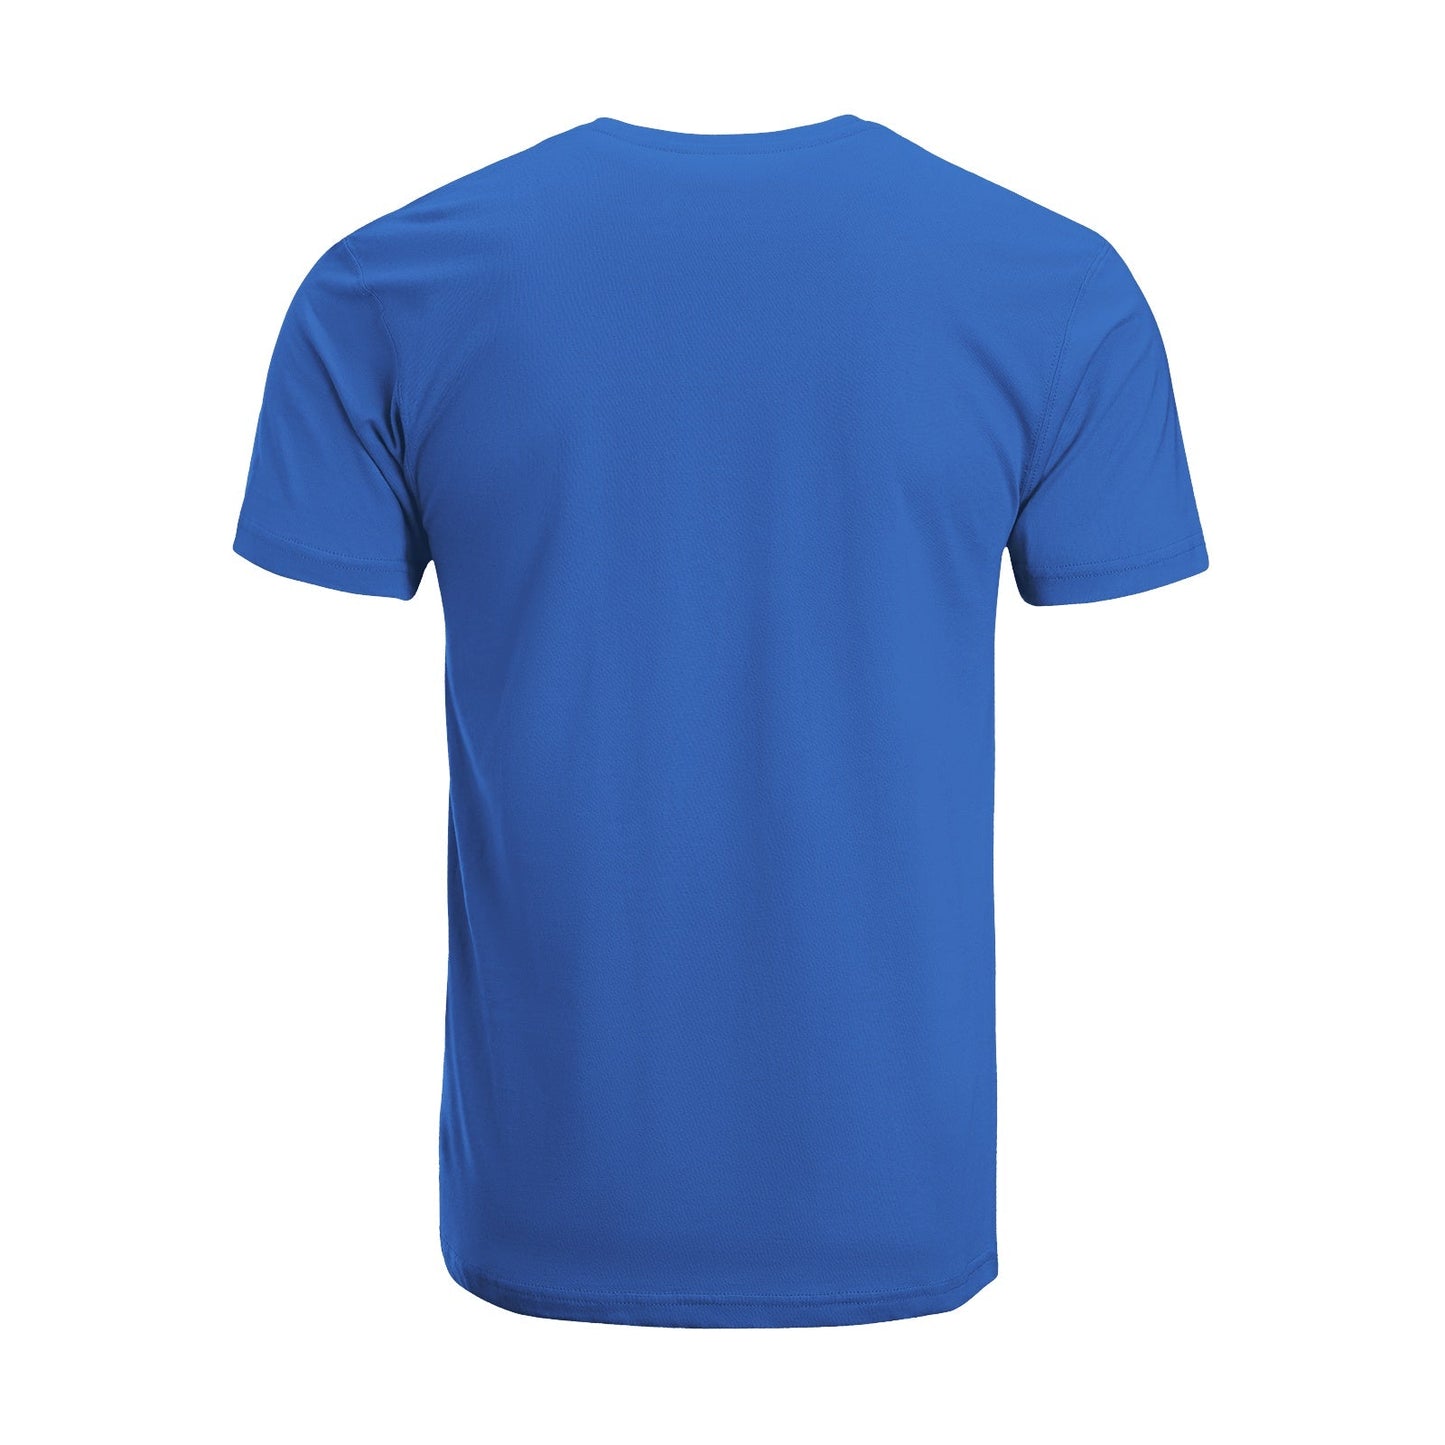 Unisex Short Sleeve Crew Neck Cotton Jersey T-Shirt CAT 22 - Tara-Outfits.com